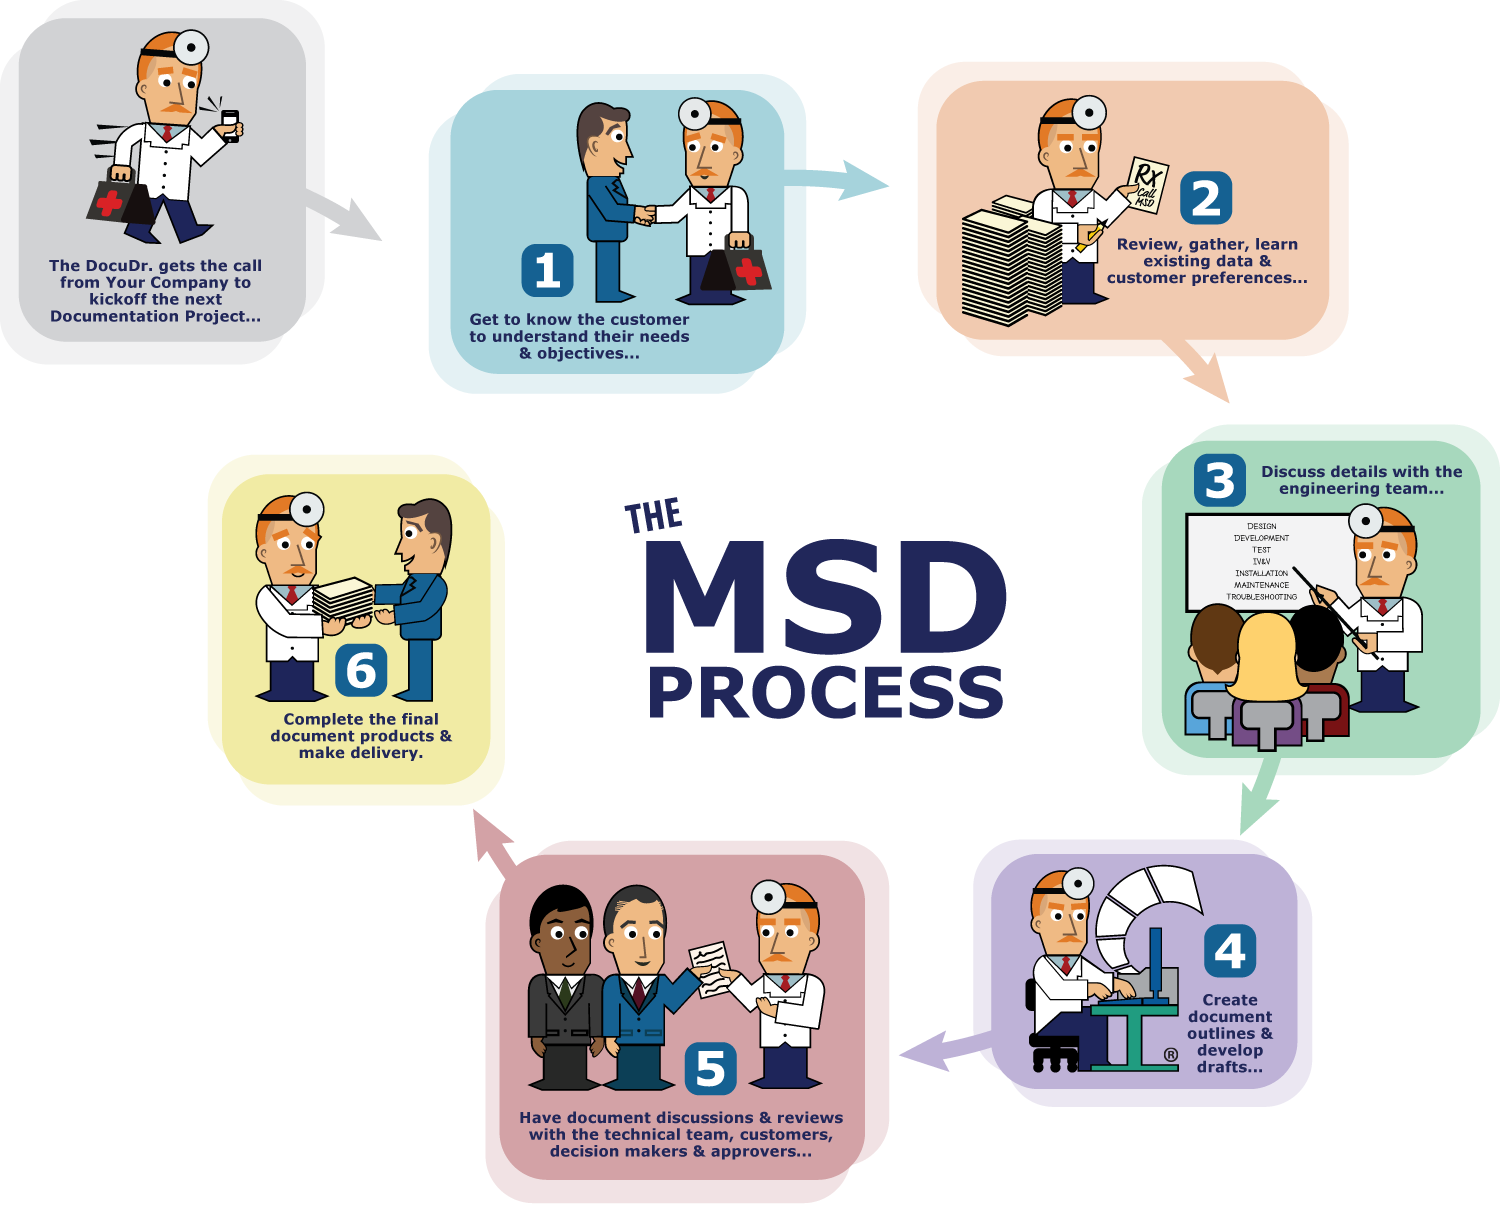 the MSD Process